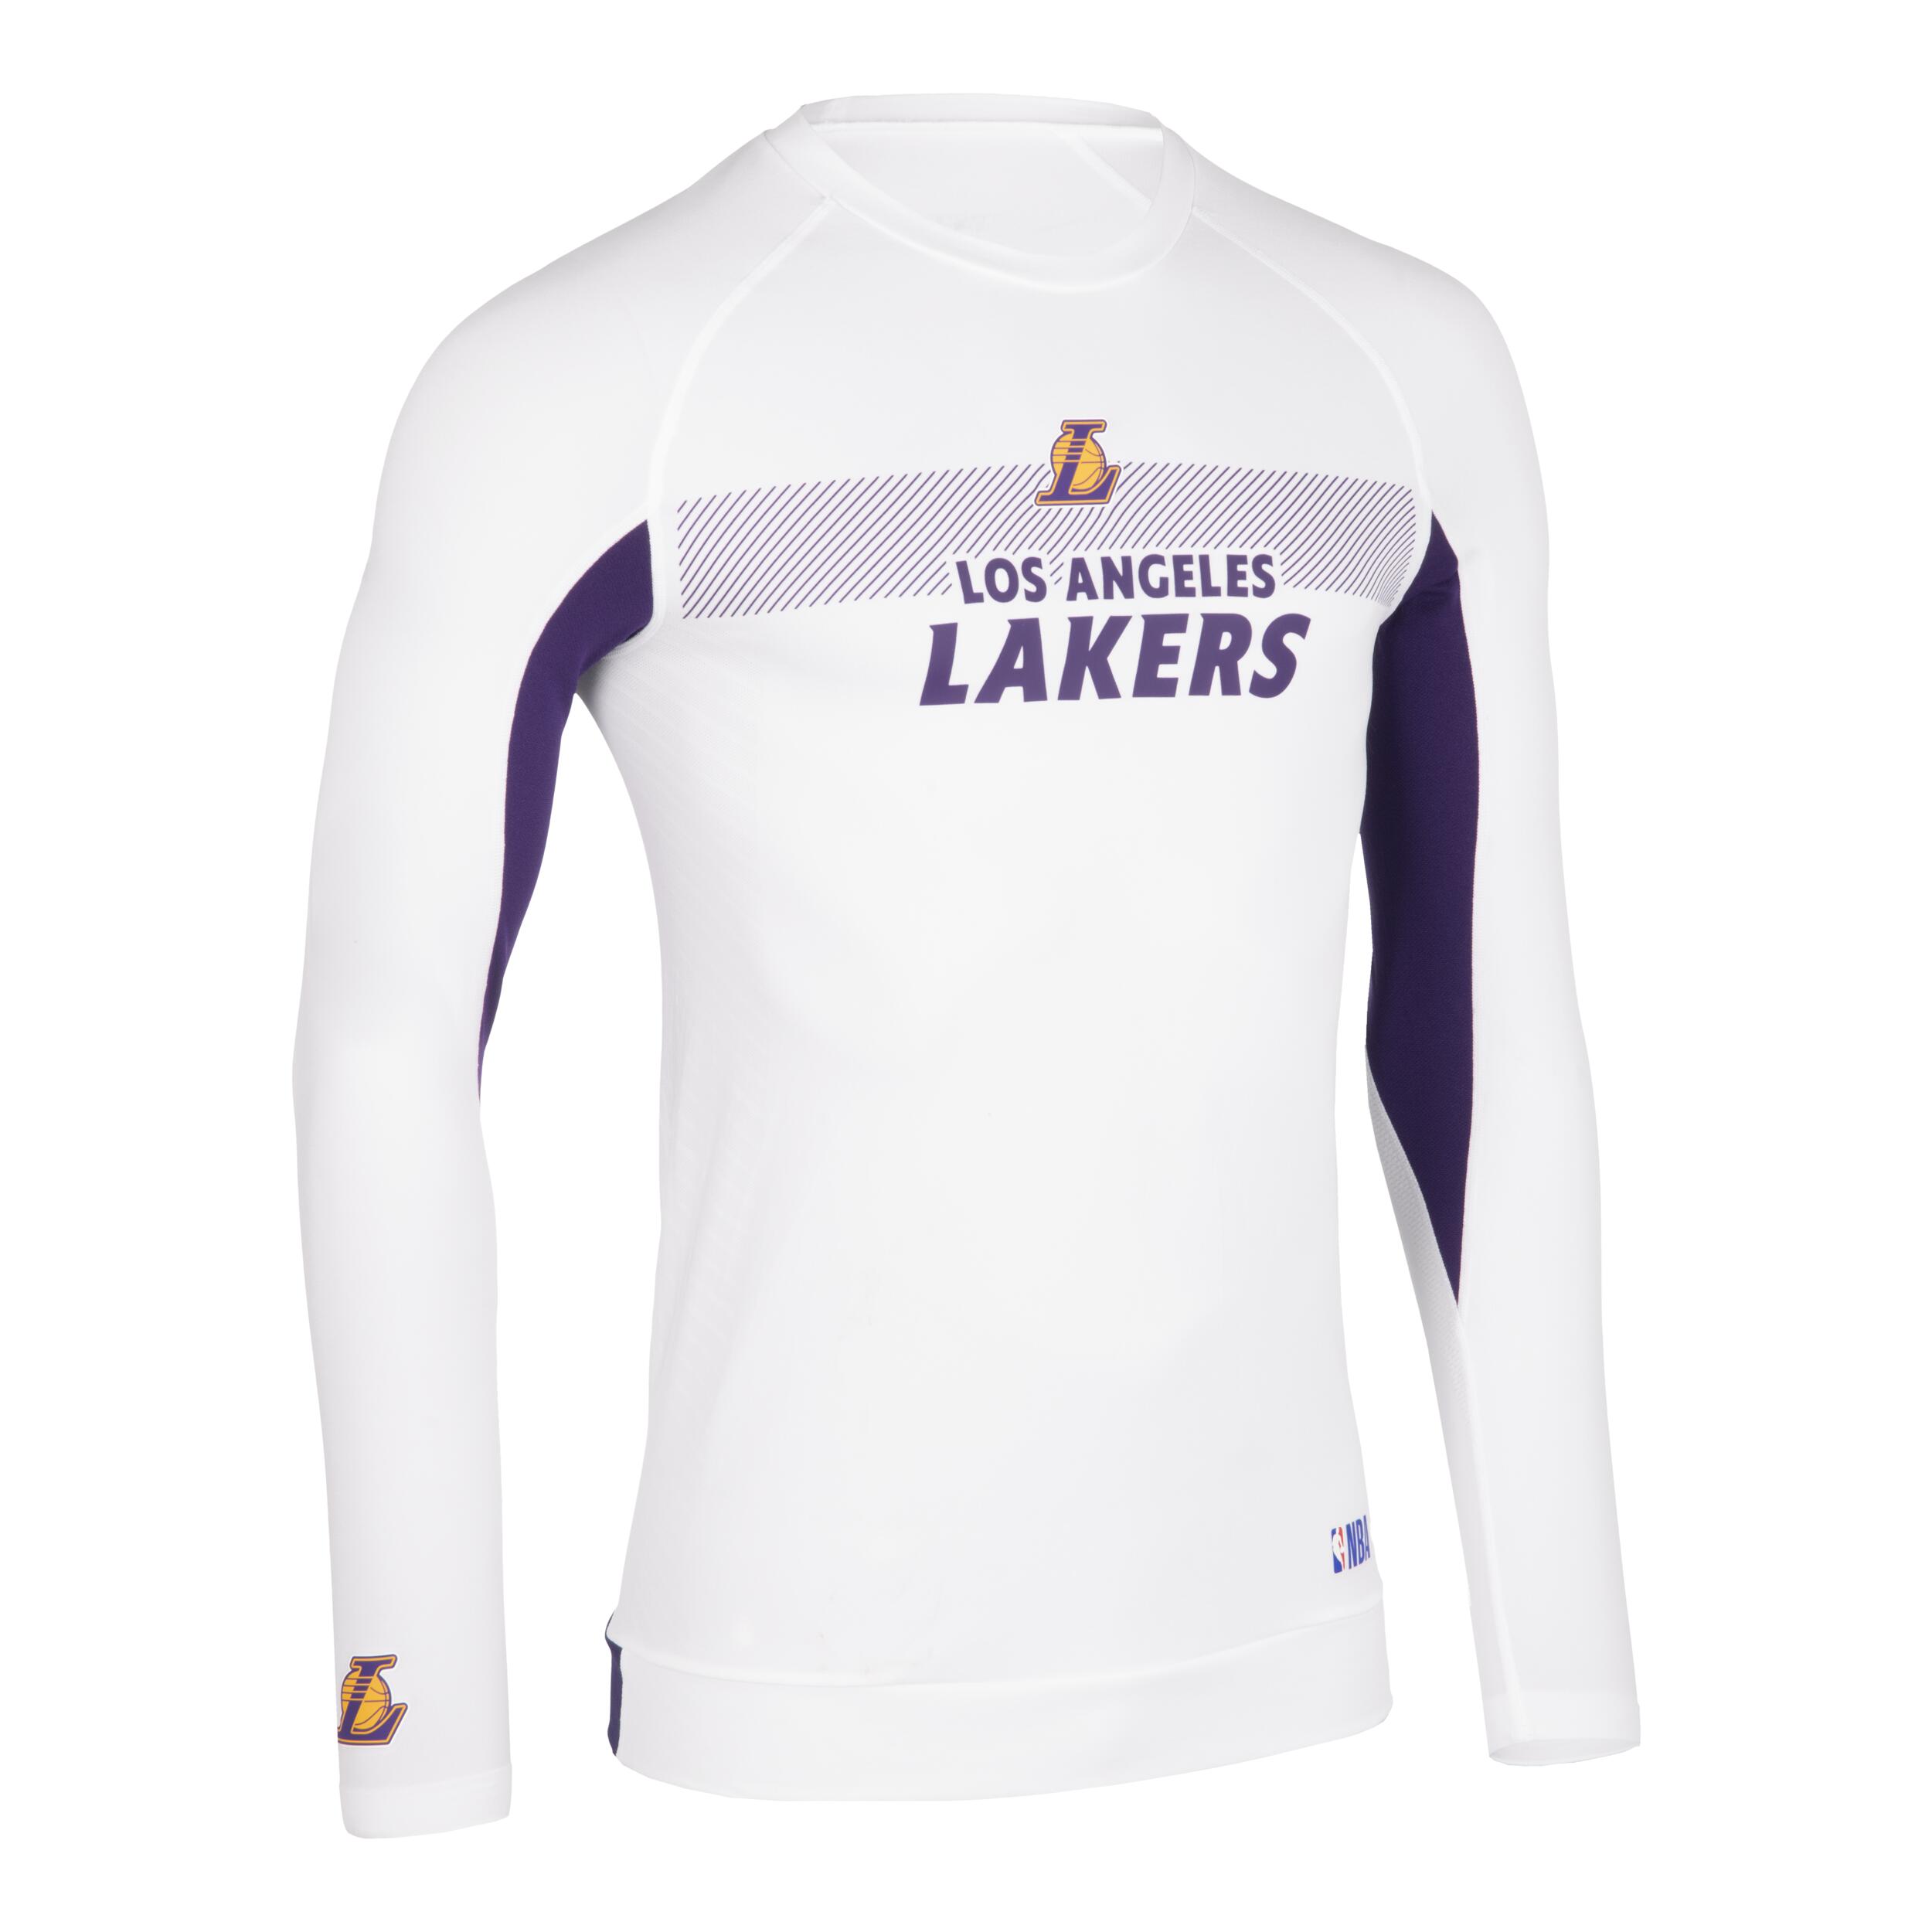 Men's/Women's Basketball Base Layer Jersey UT500 - NBA Los Angeles Lakers/White 1/10